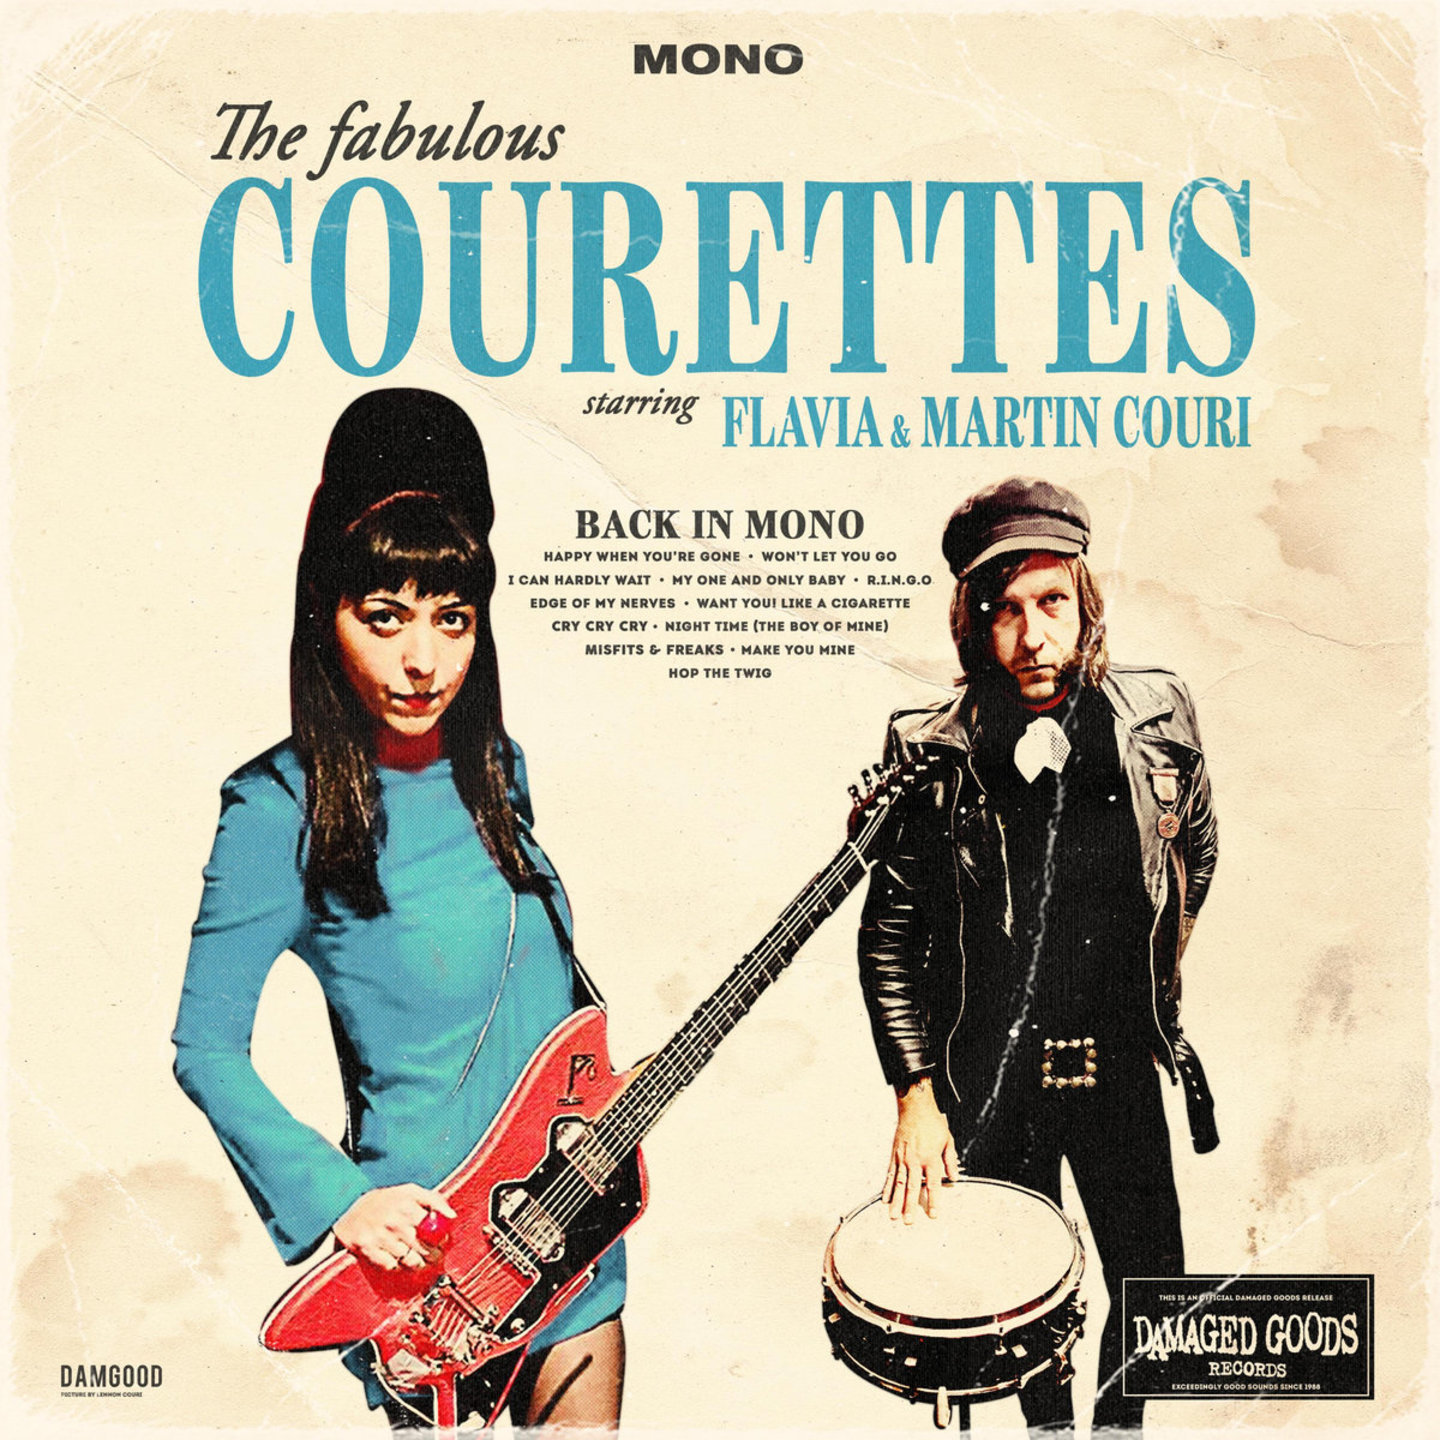 COURETTES, THE - Back in Mono LP